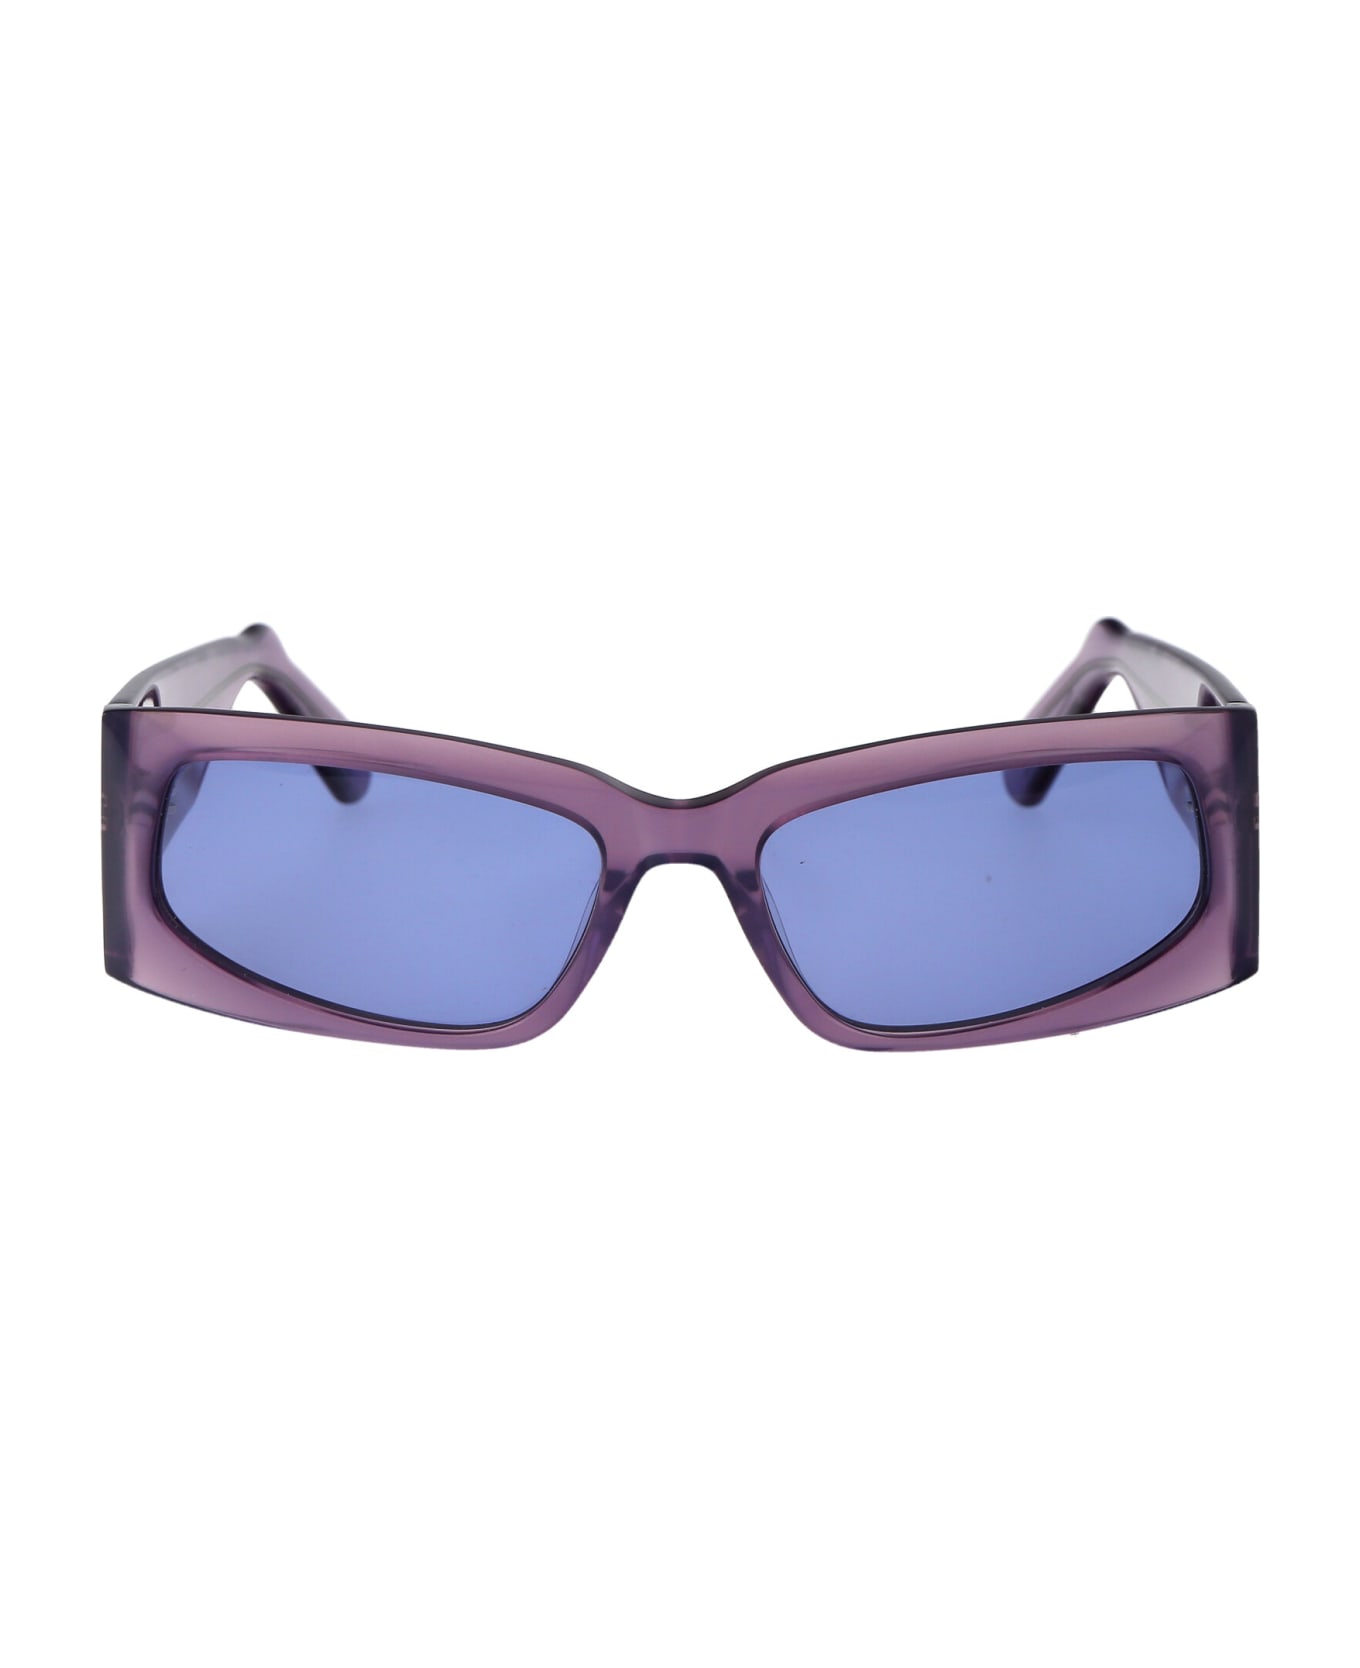 GCDS Gd0035 Sunglasses - 83V Viola/Altro/Blu